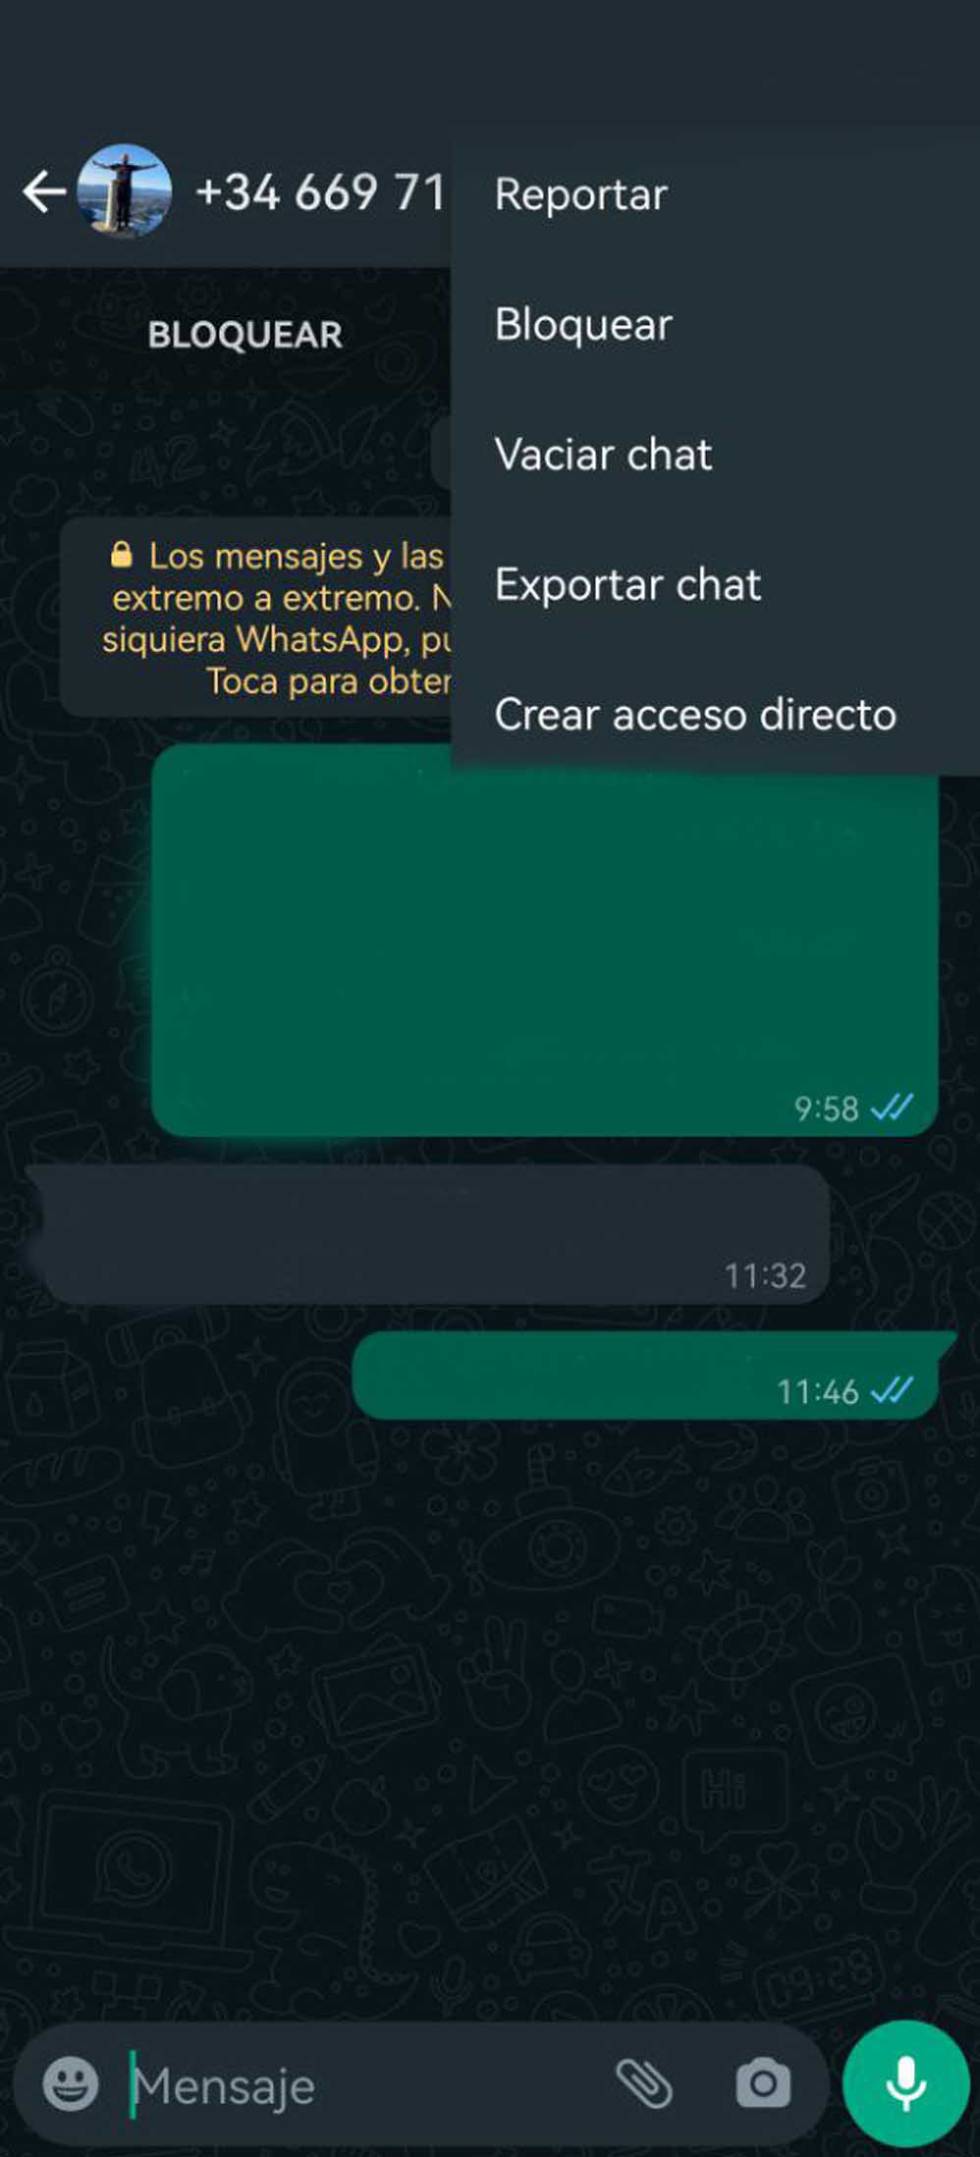 Block an account in the WhatsApp application